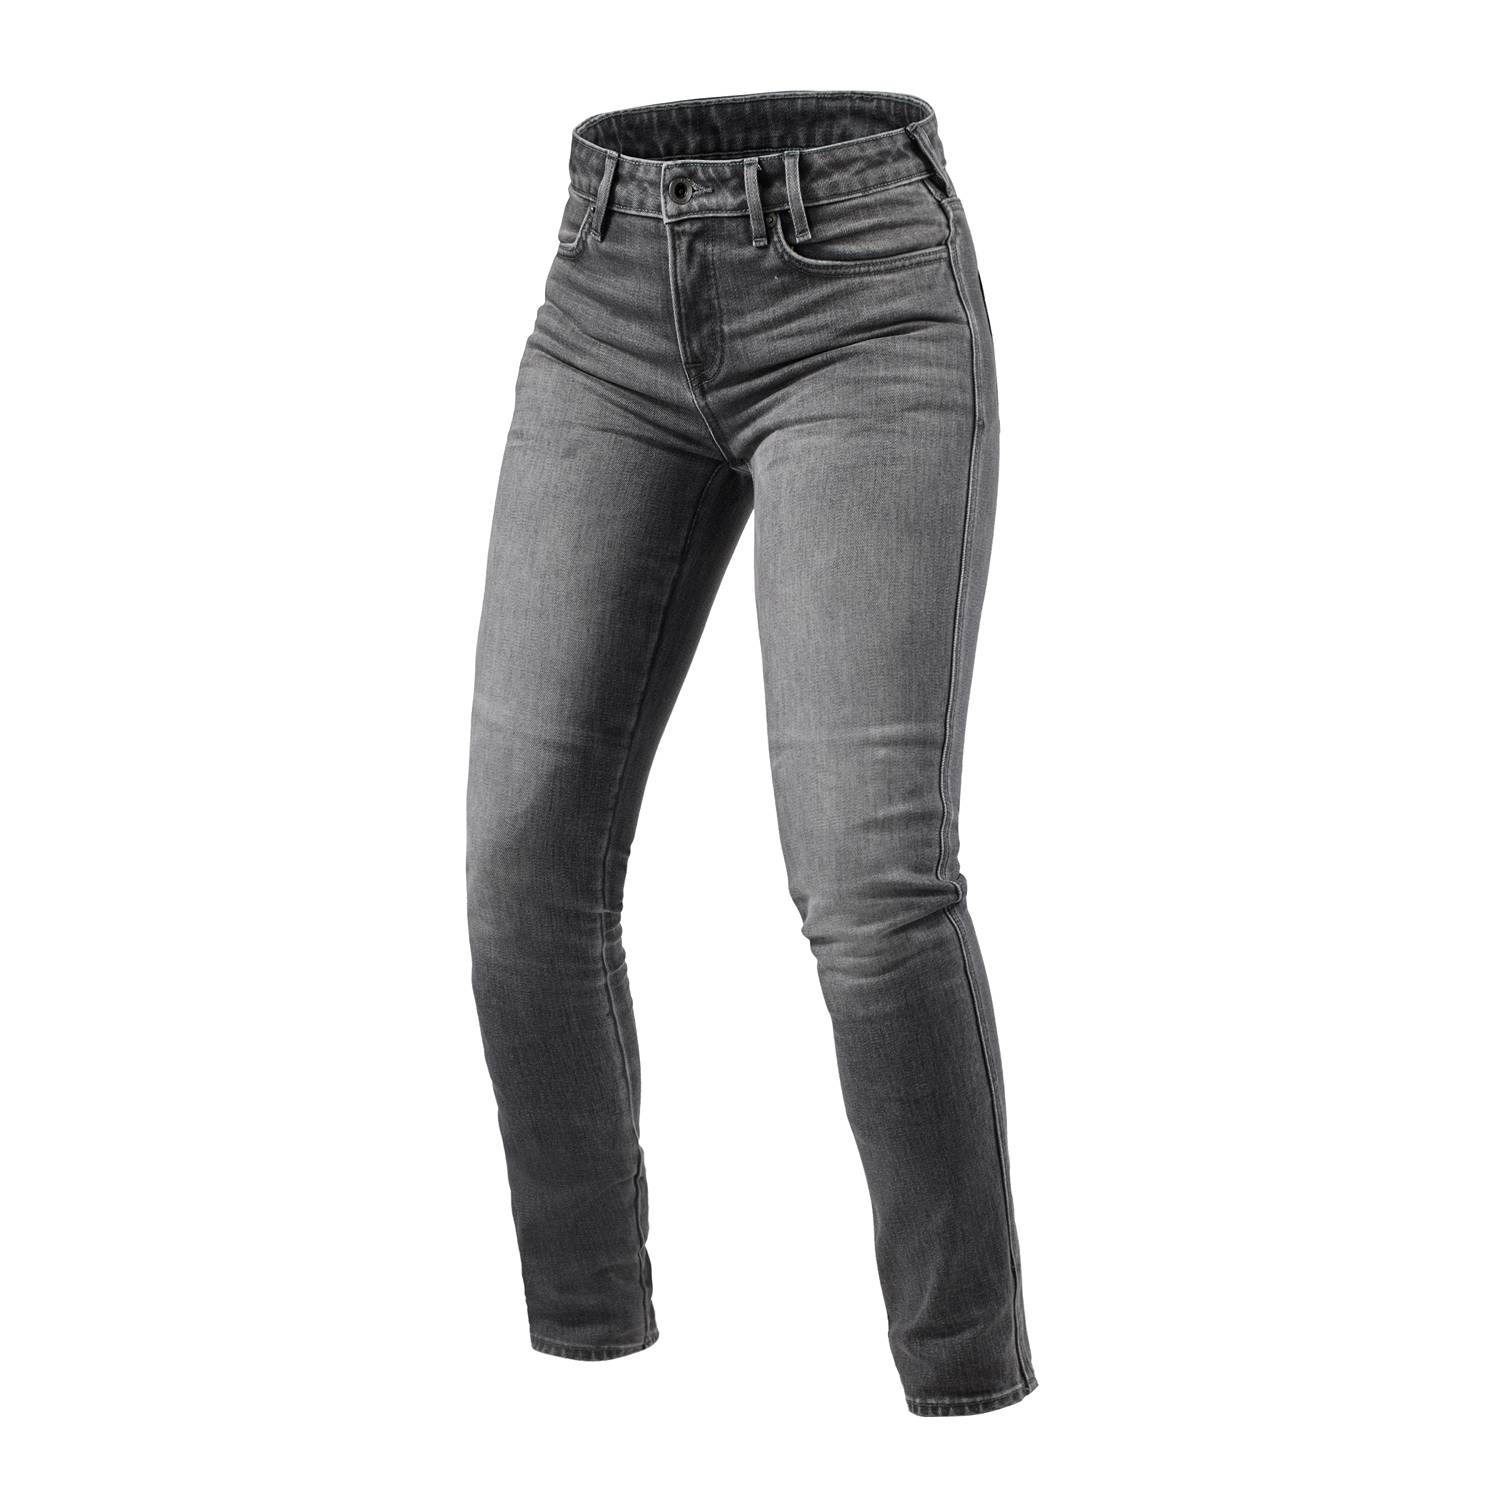 Image of REV'IT! Jeans Shelby 2 Ladies SK Medium Grey Stone L30 Size L30/W31 ID 8700001376747